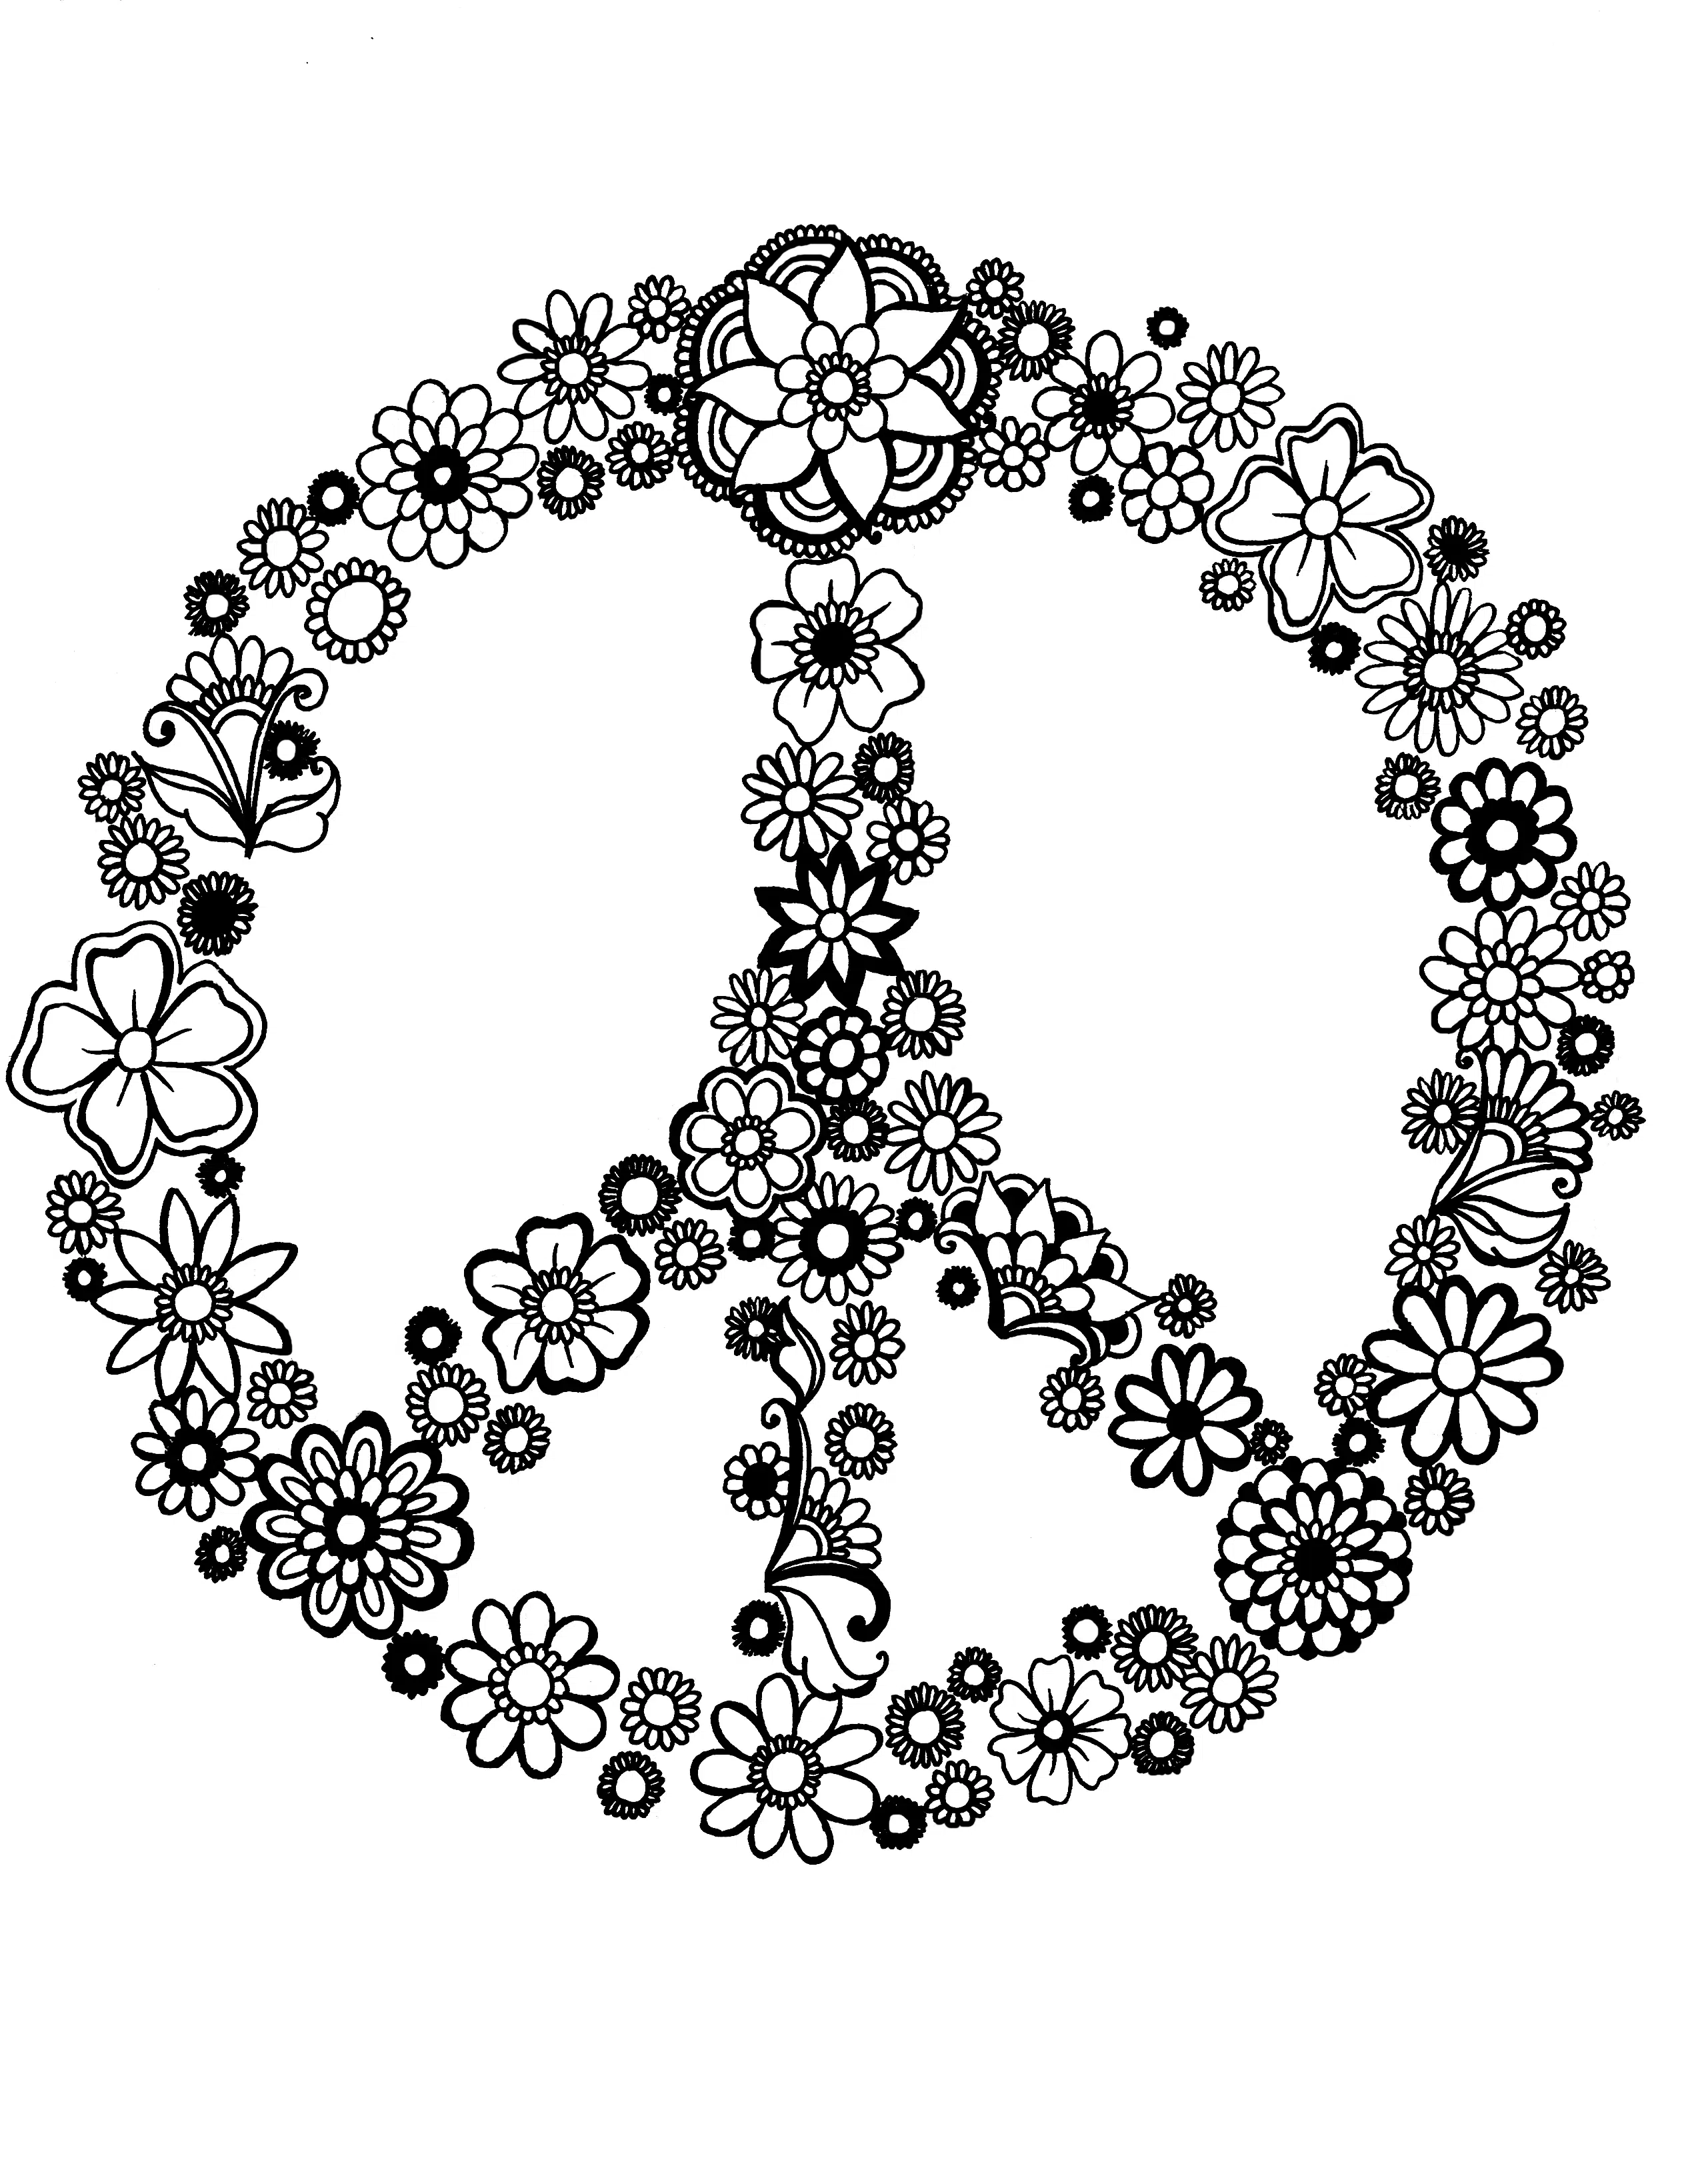 Taikos mandala